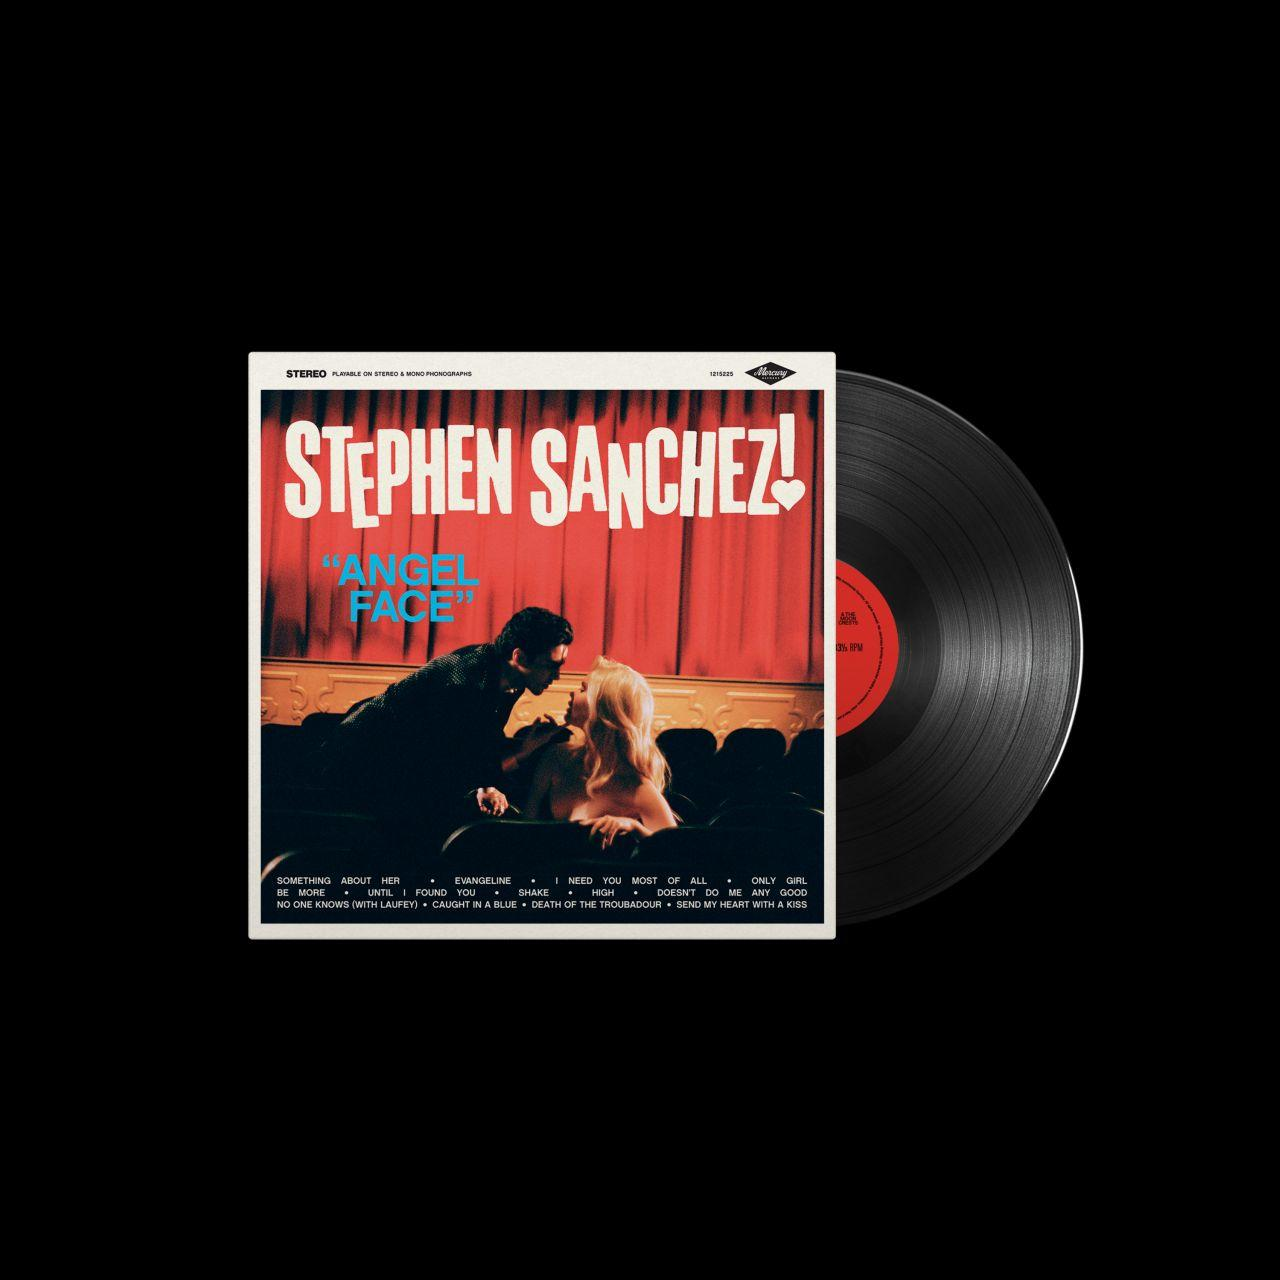 Steven Sanchez - (Vinyl) - Face Vinyl) Black Angel (STD